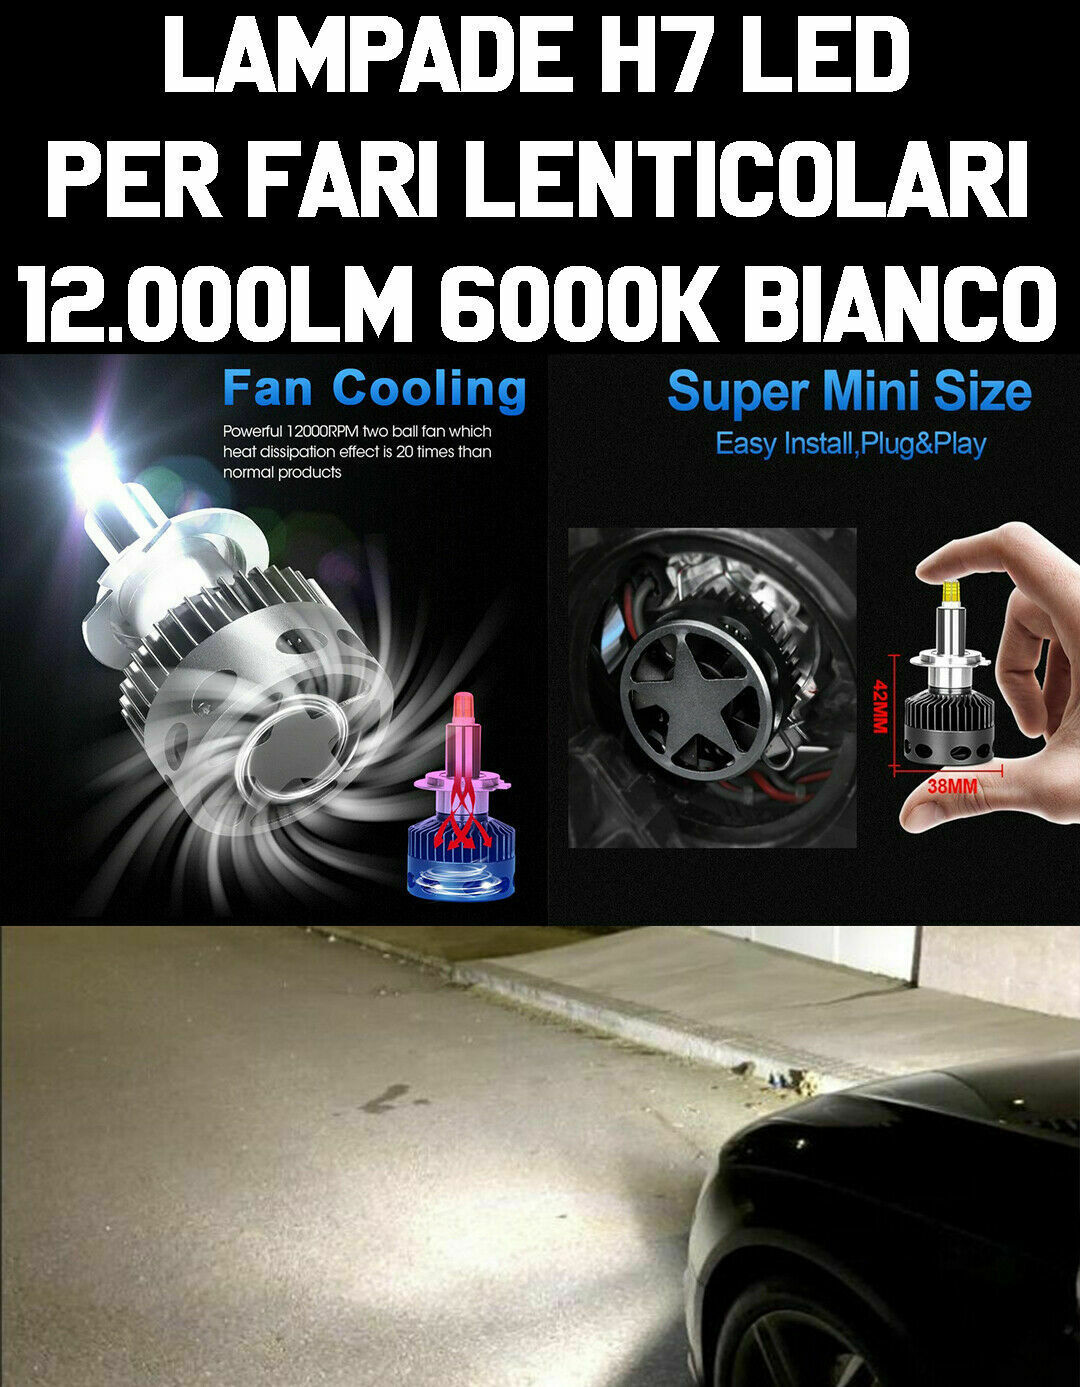 KIT LED H7 6000K CANBUS PER LENTICOLARI ALFA ROMEO GIULIETTA NO AVARIA